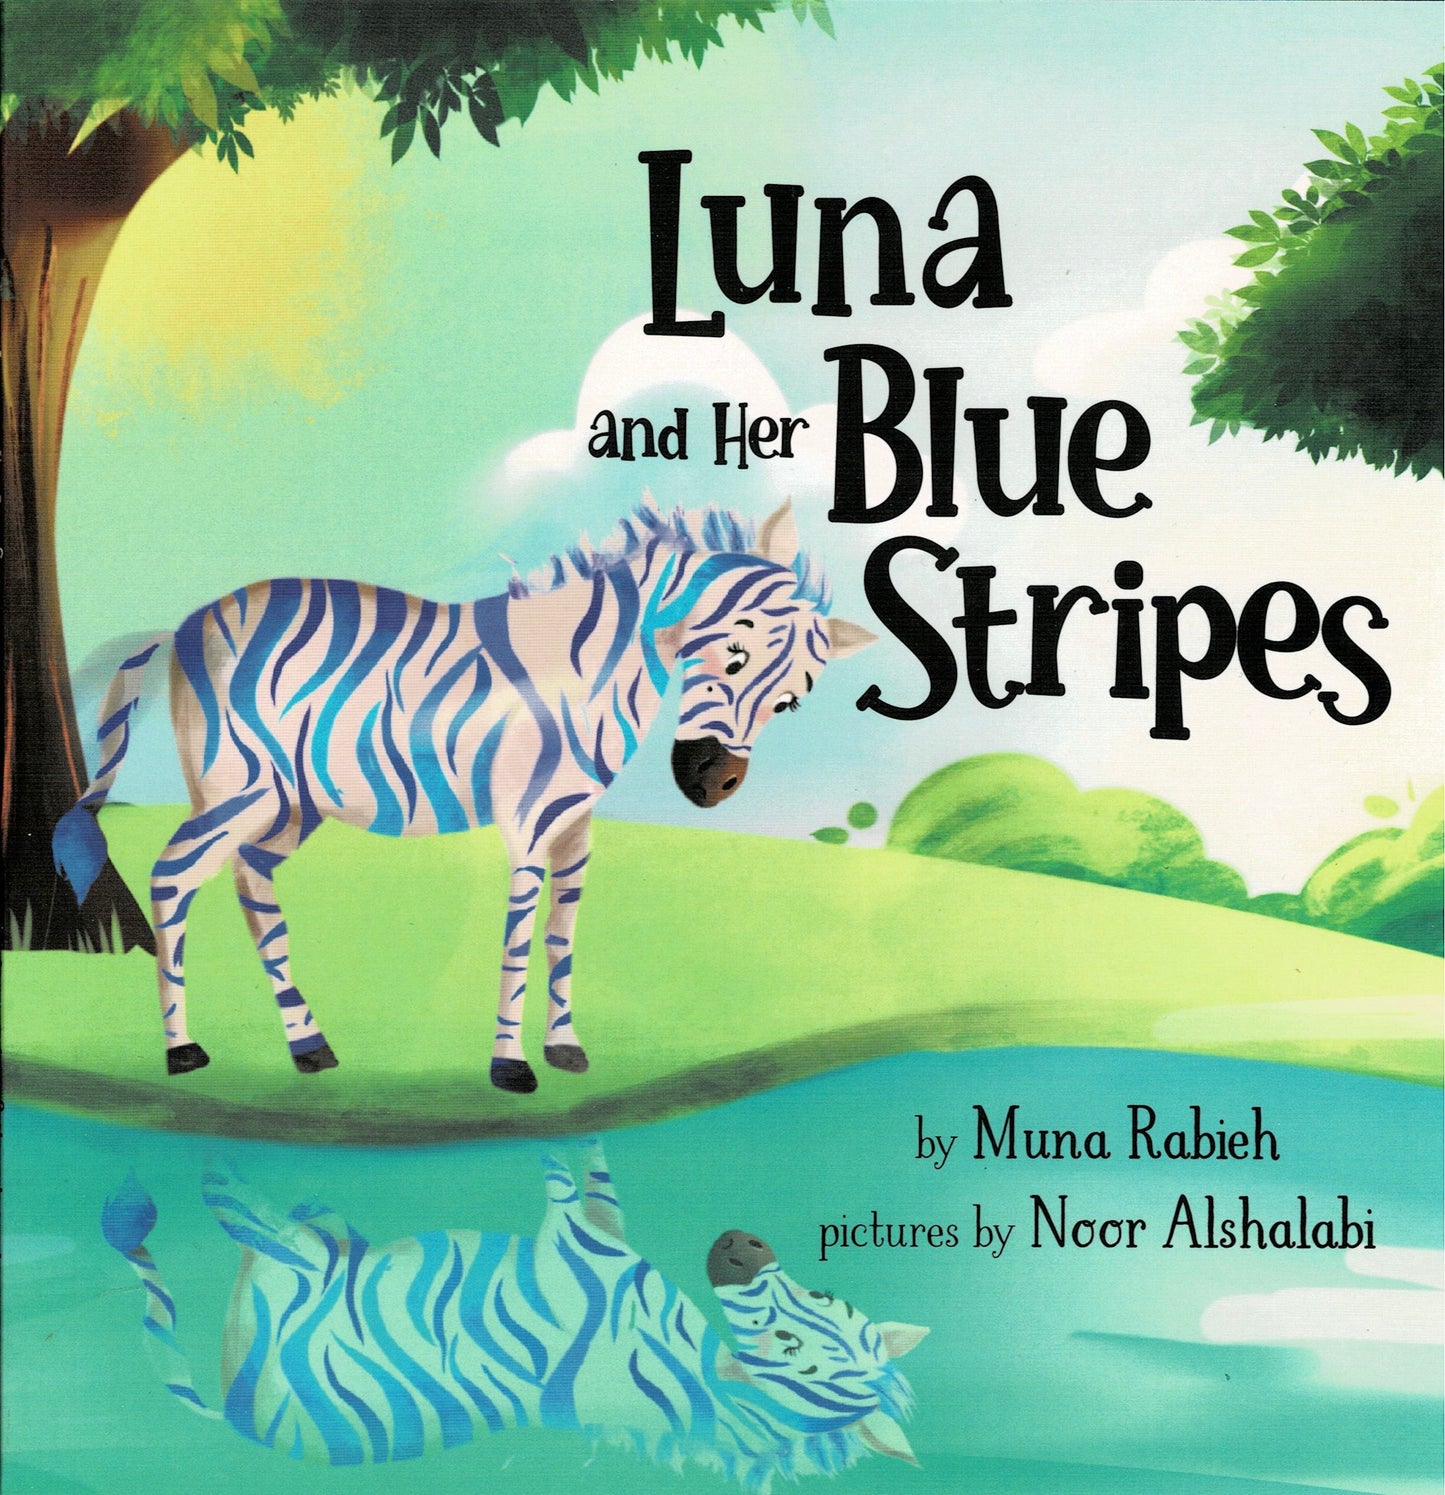 Luna and her Blue stripes